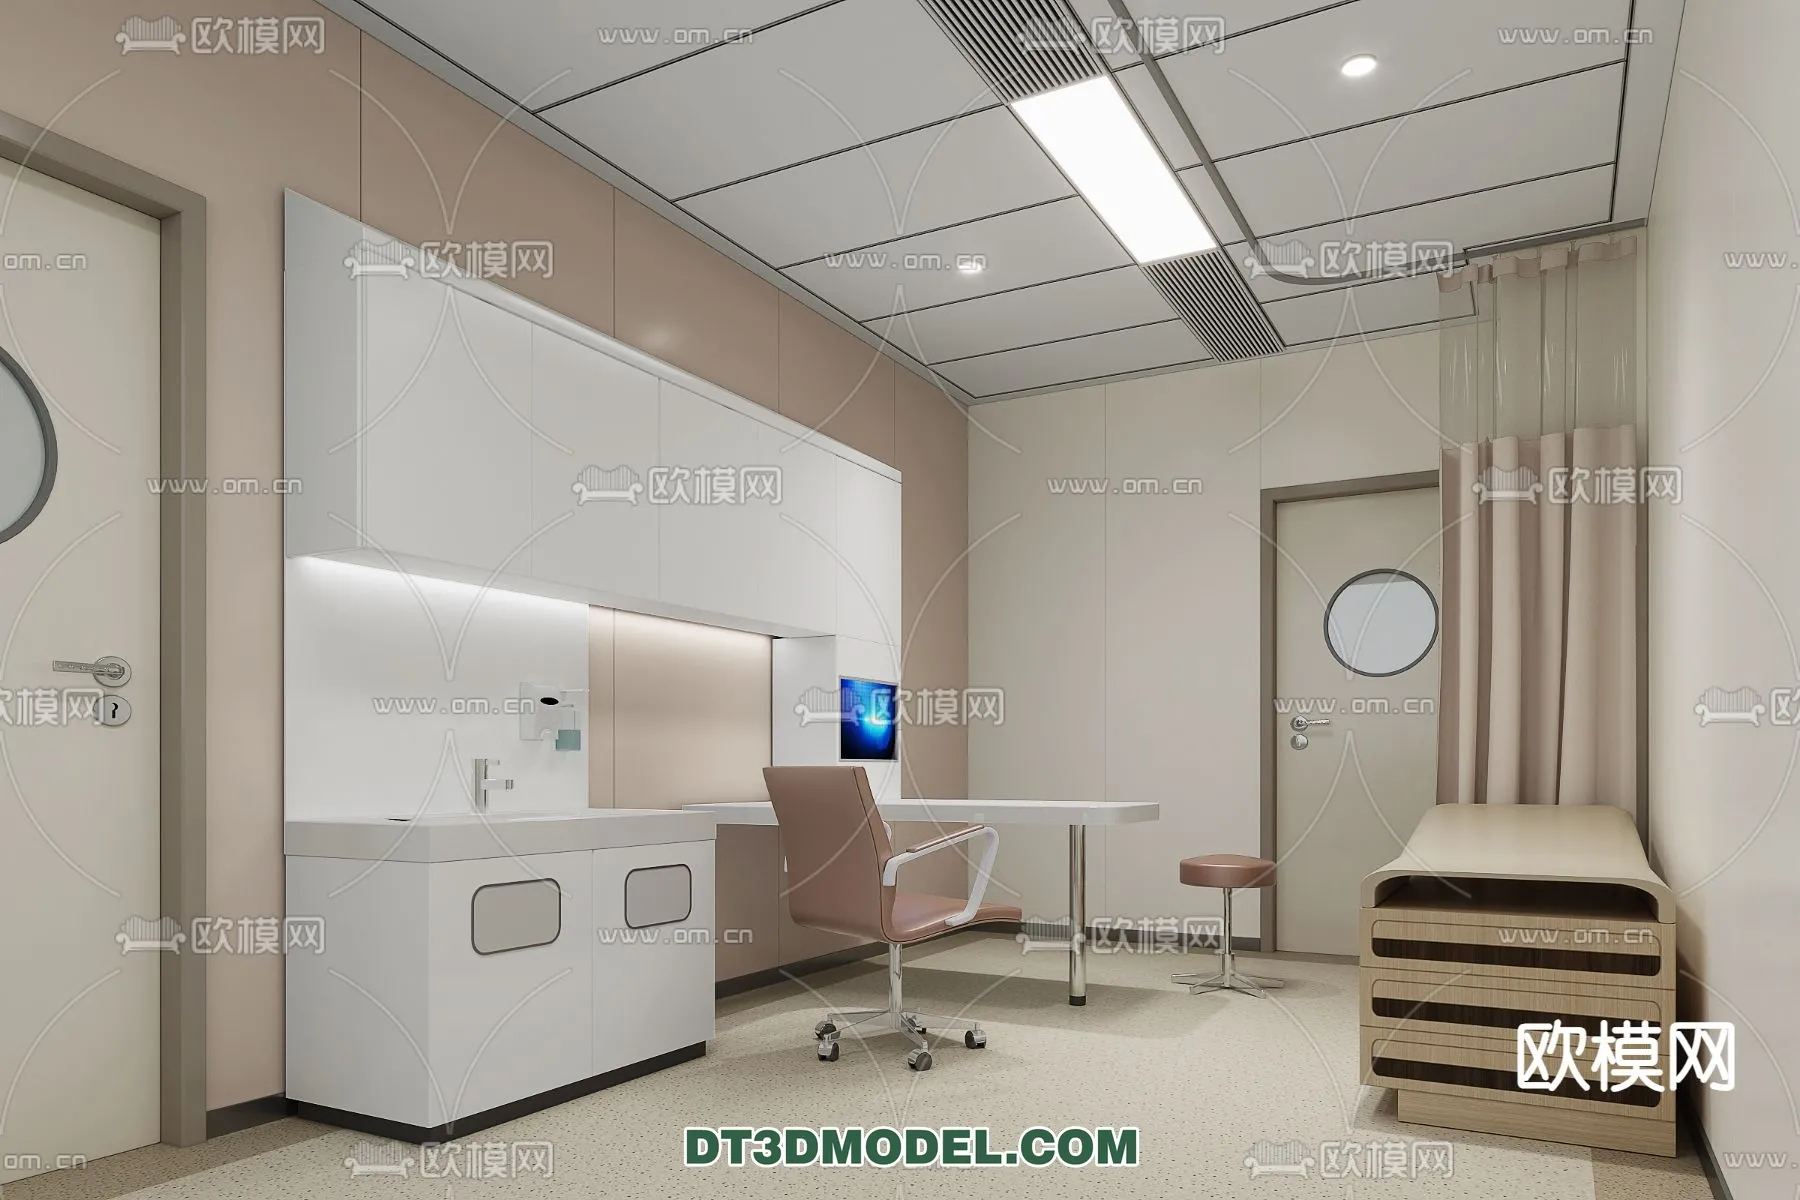 HOSPITAL 3D SCENES – MODERN – 0185